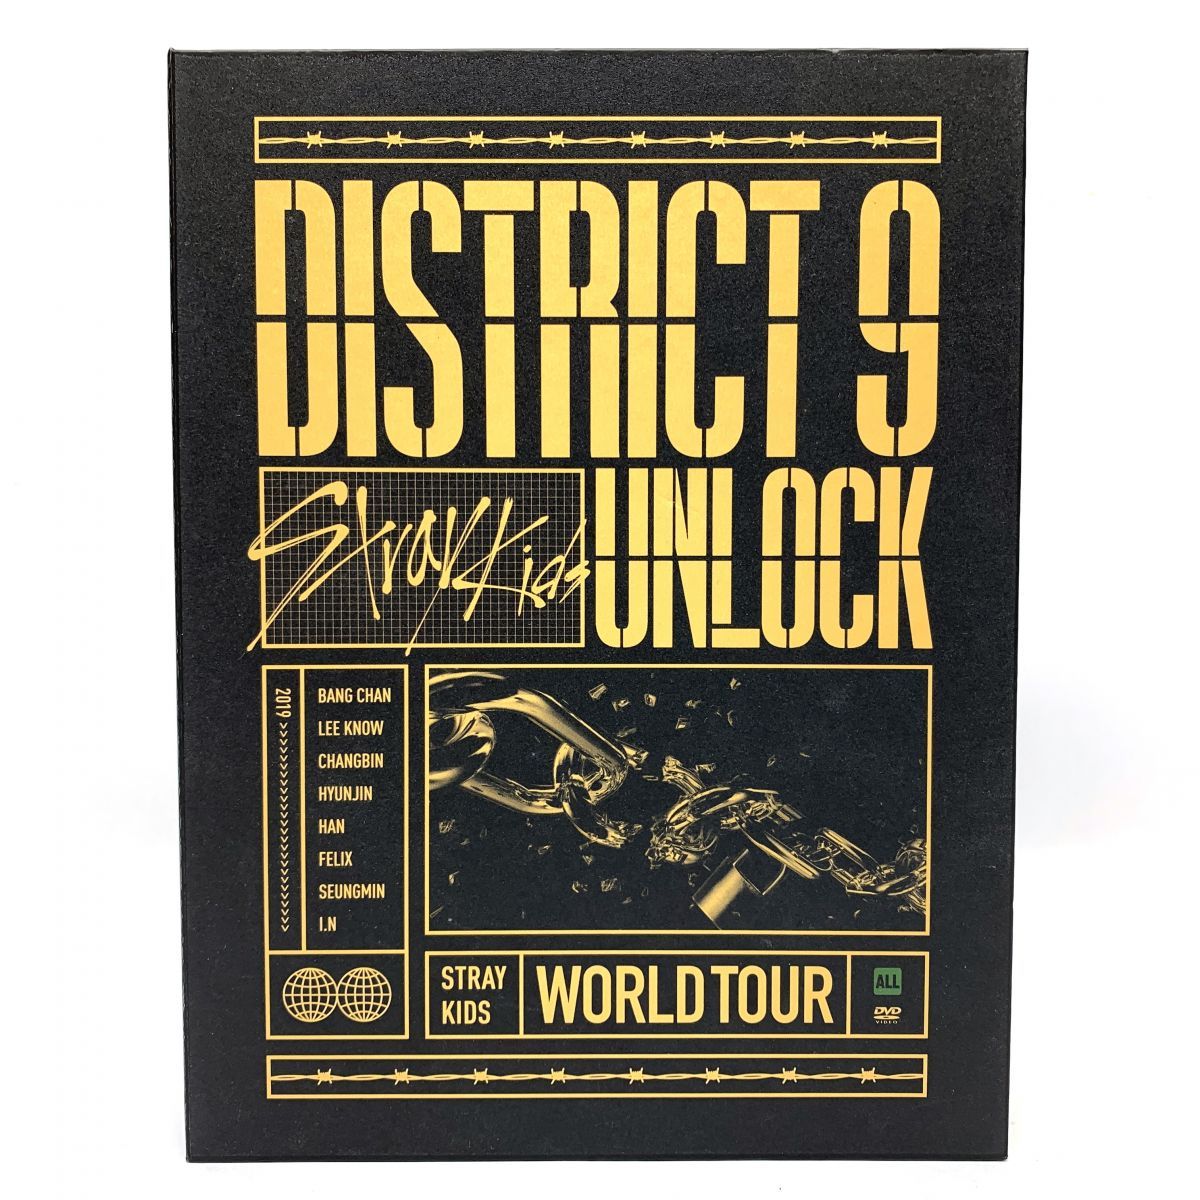 DVD Stray Kids World Tour 'District 9：Unlock'in SEOUL 輸入盤 